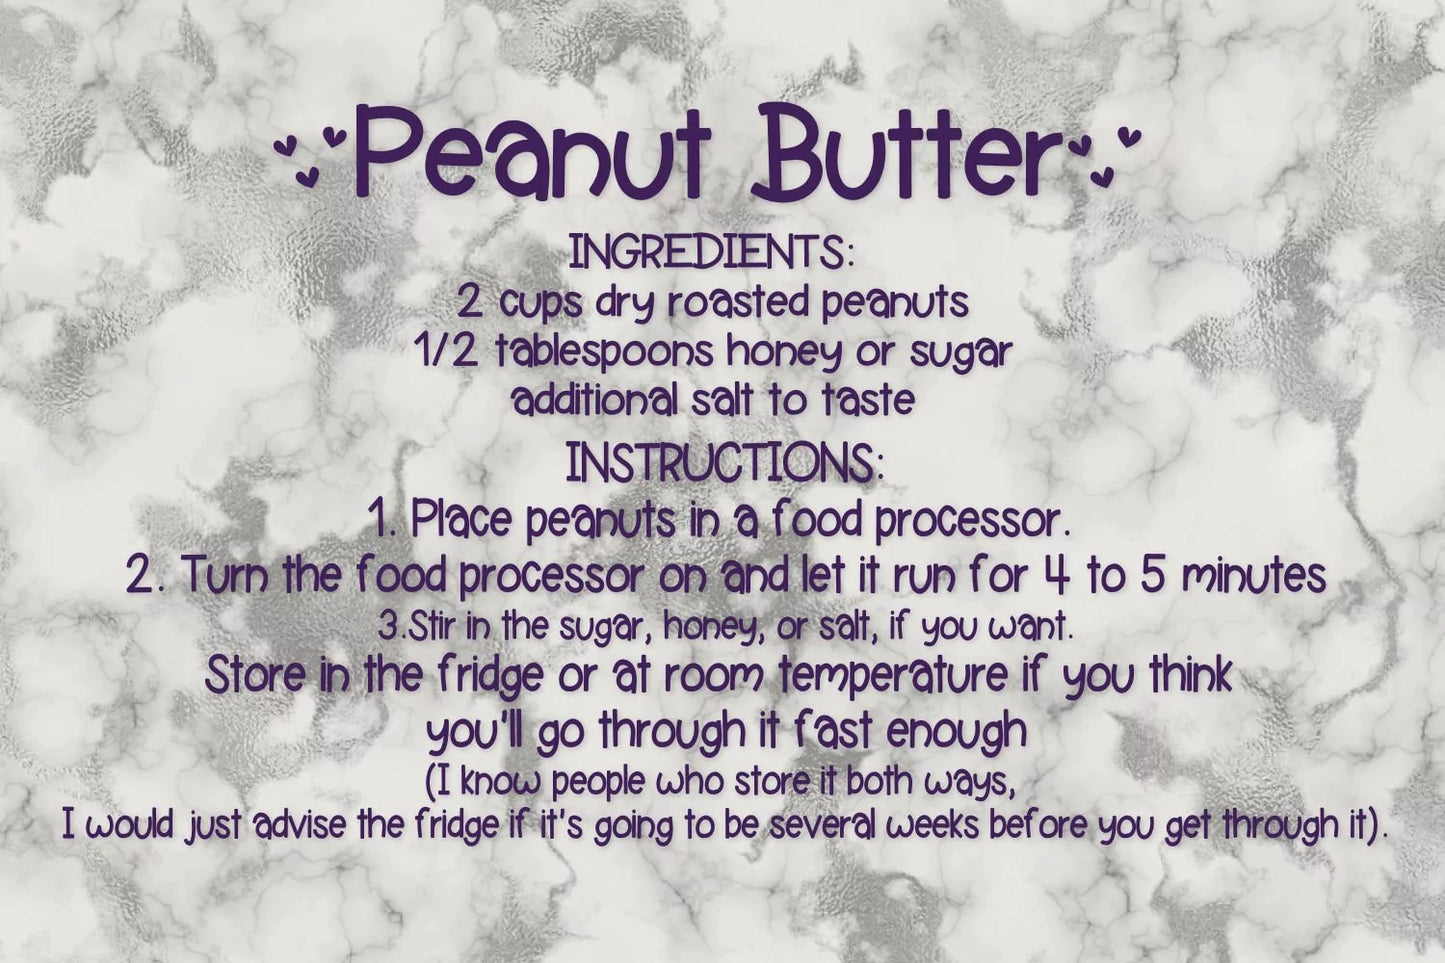 Peanut Butter And Jealous - A Handwritten Font Duo